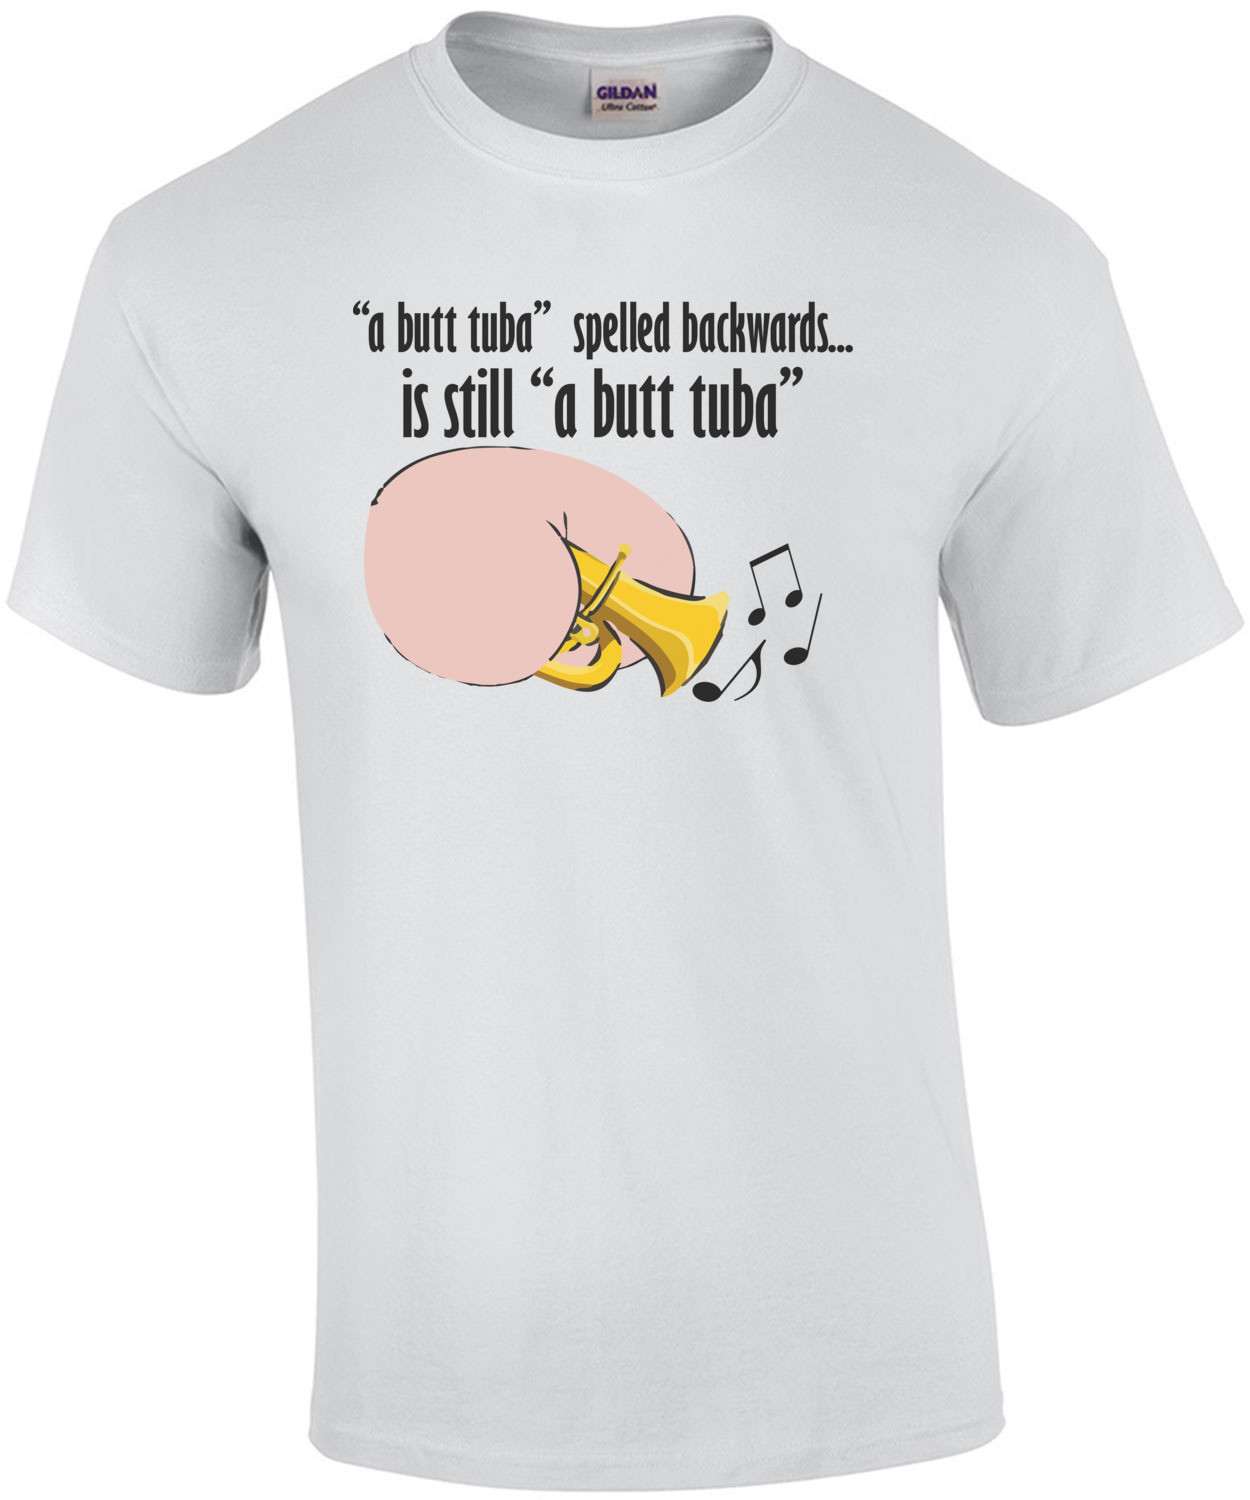 a butt tuba spelled backwards is still a butt tuba. Funny T-Shirt